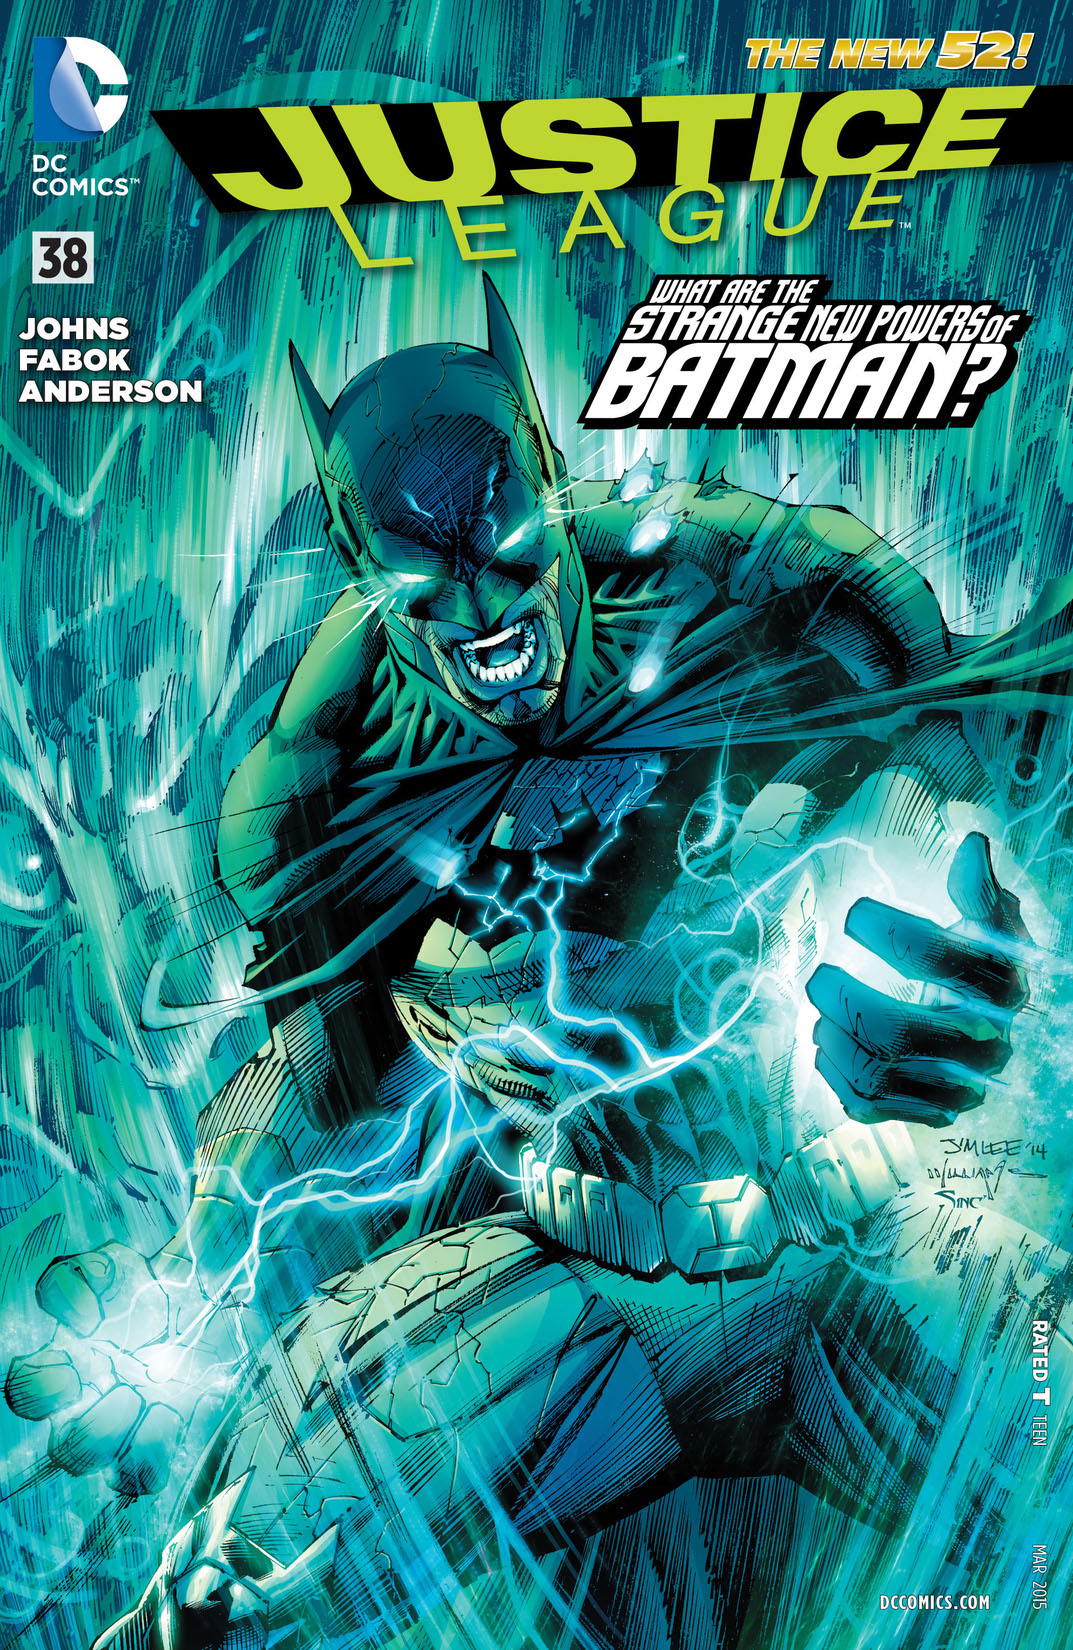 Justice League (2011-) #38 preview images